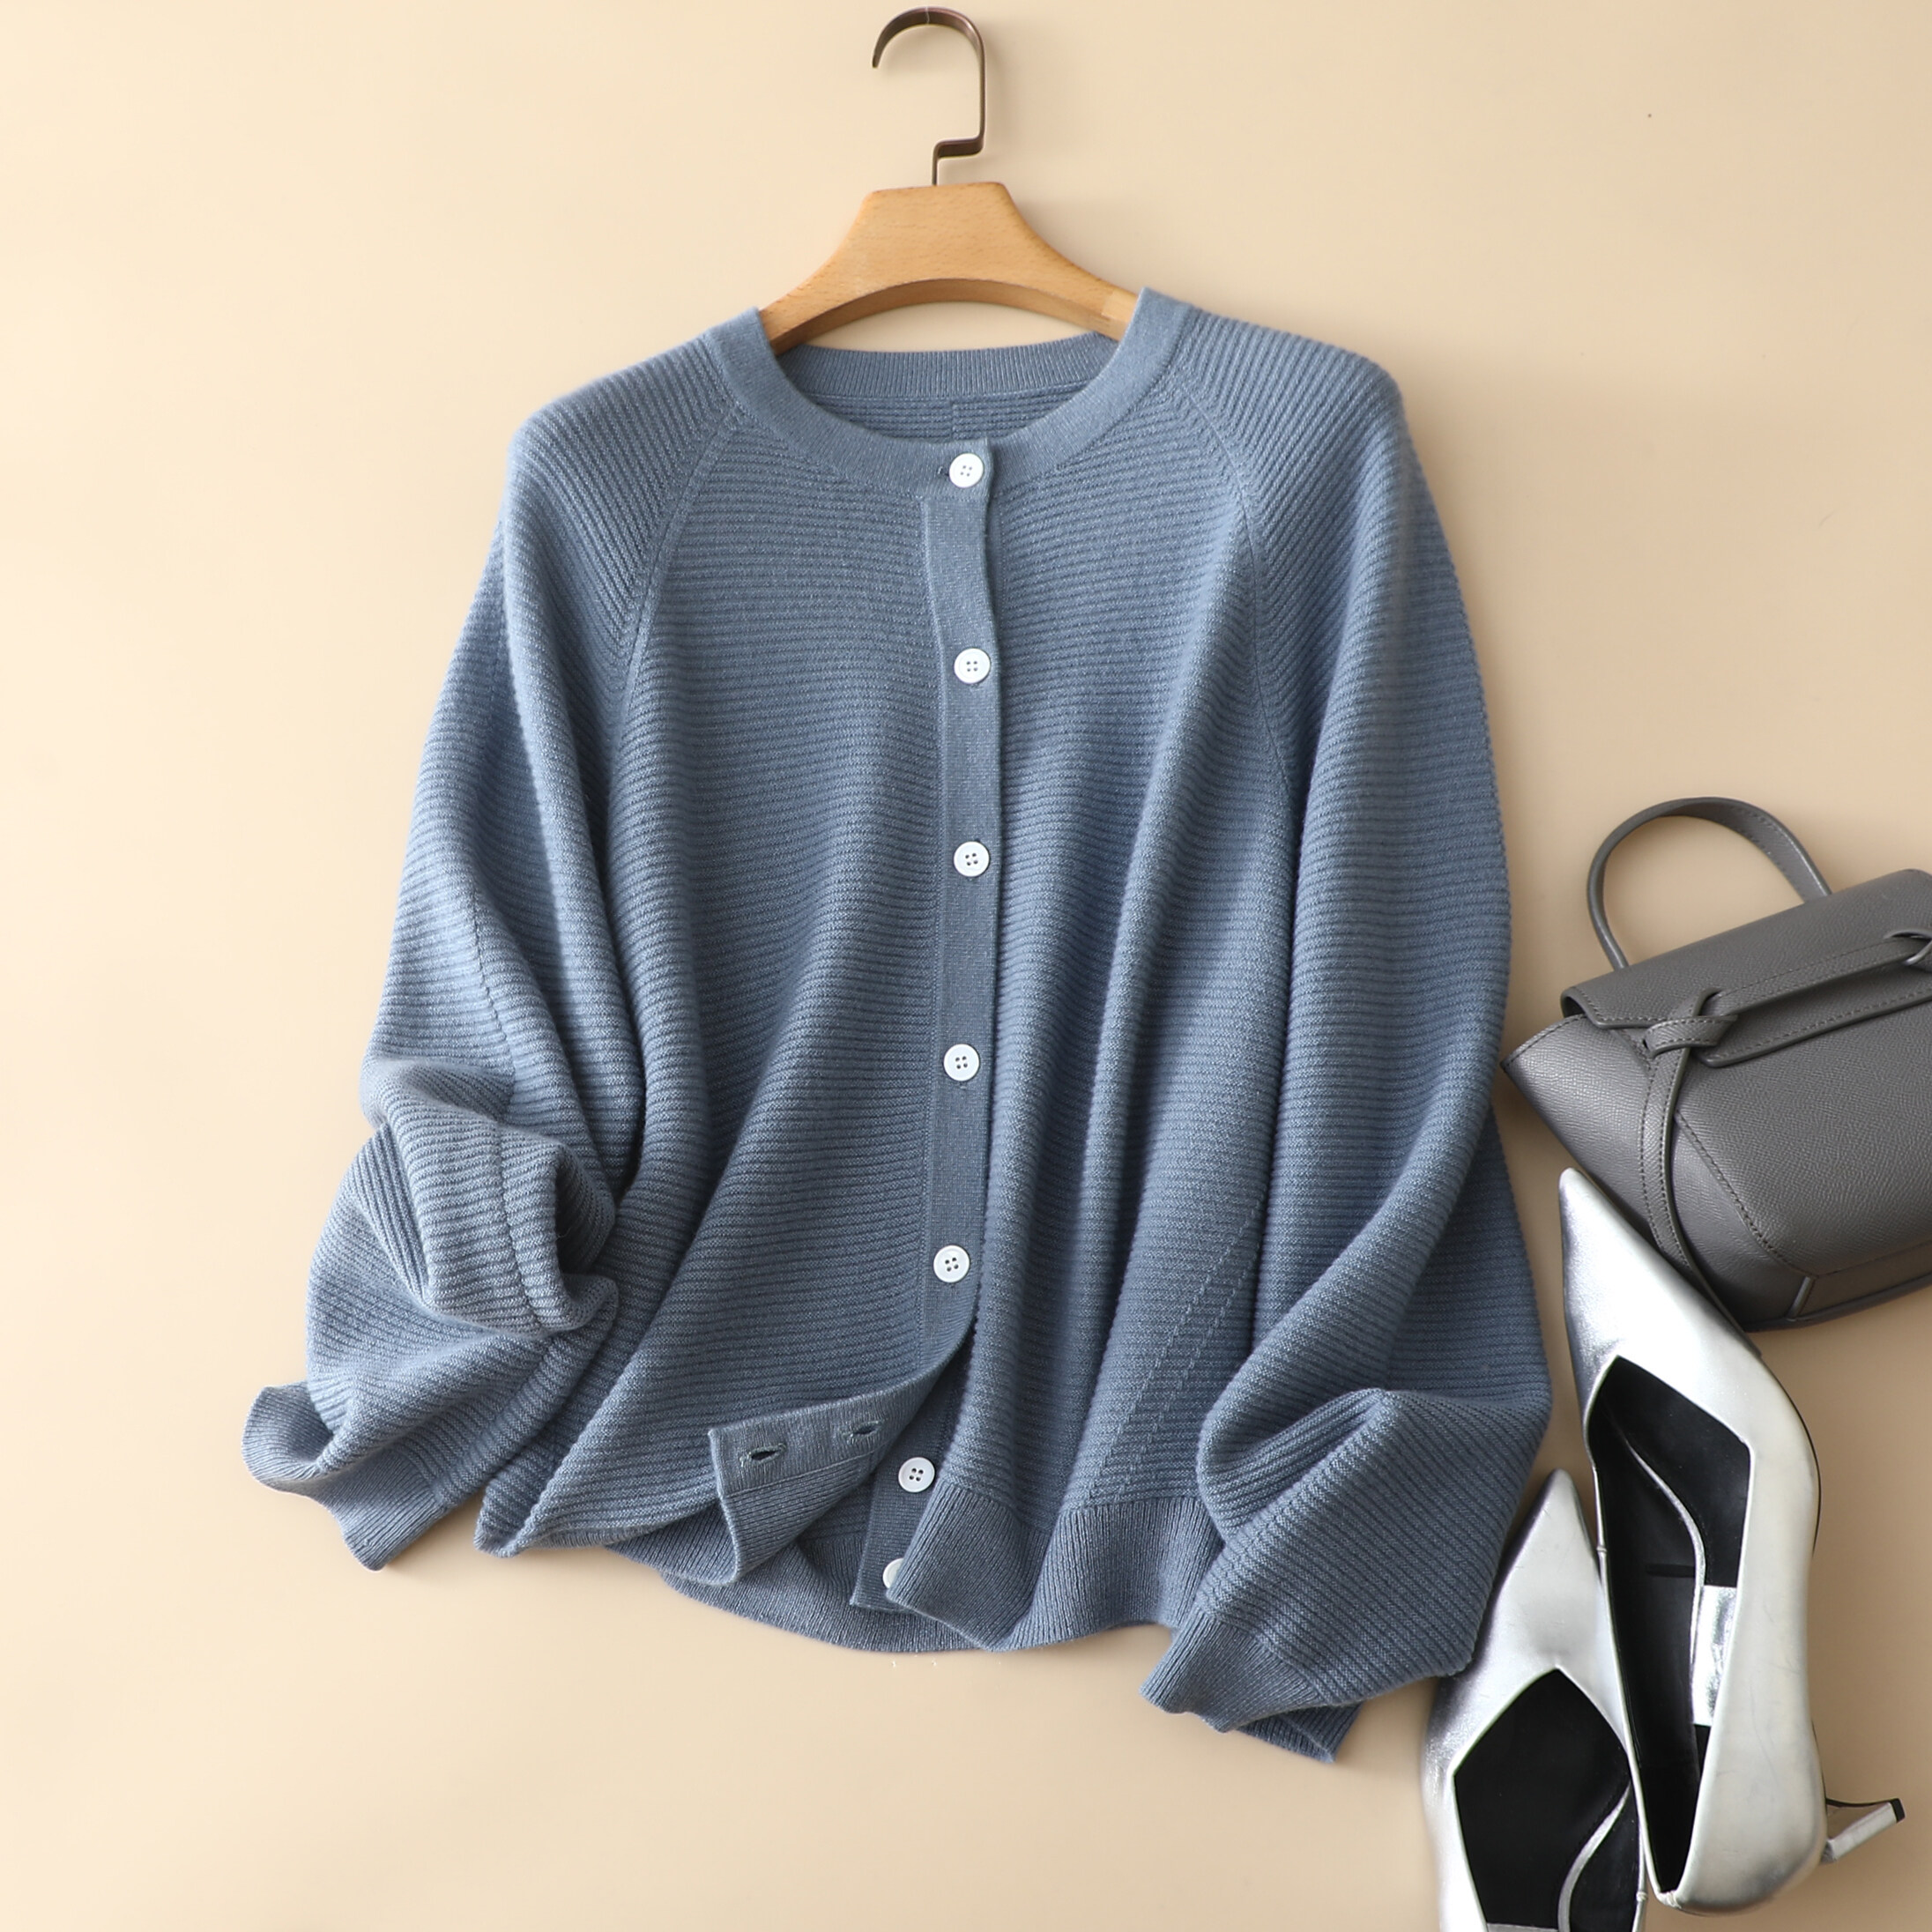 Nanteng New Stock 7GG Small Round Neck Raglan Sleeved Sleeve Women Button Cardigan 70% Wool 30% Cashmere Sweater